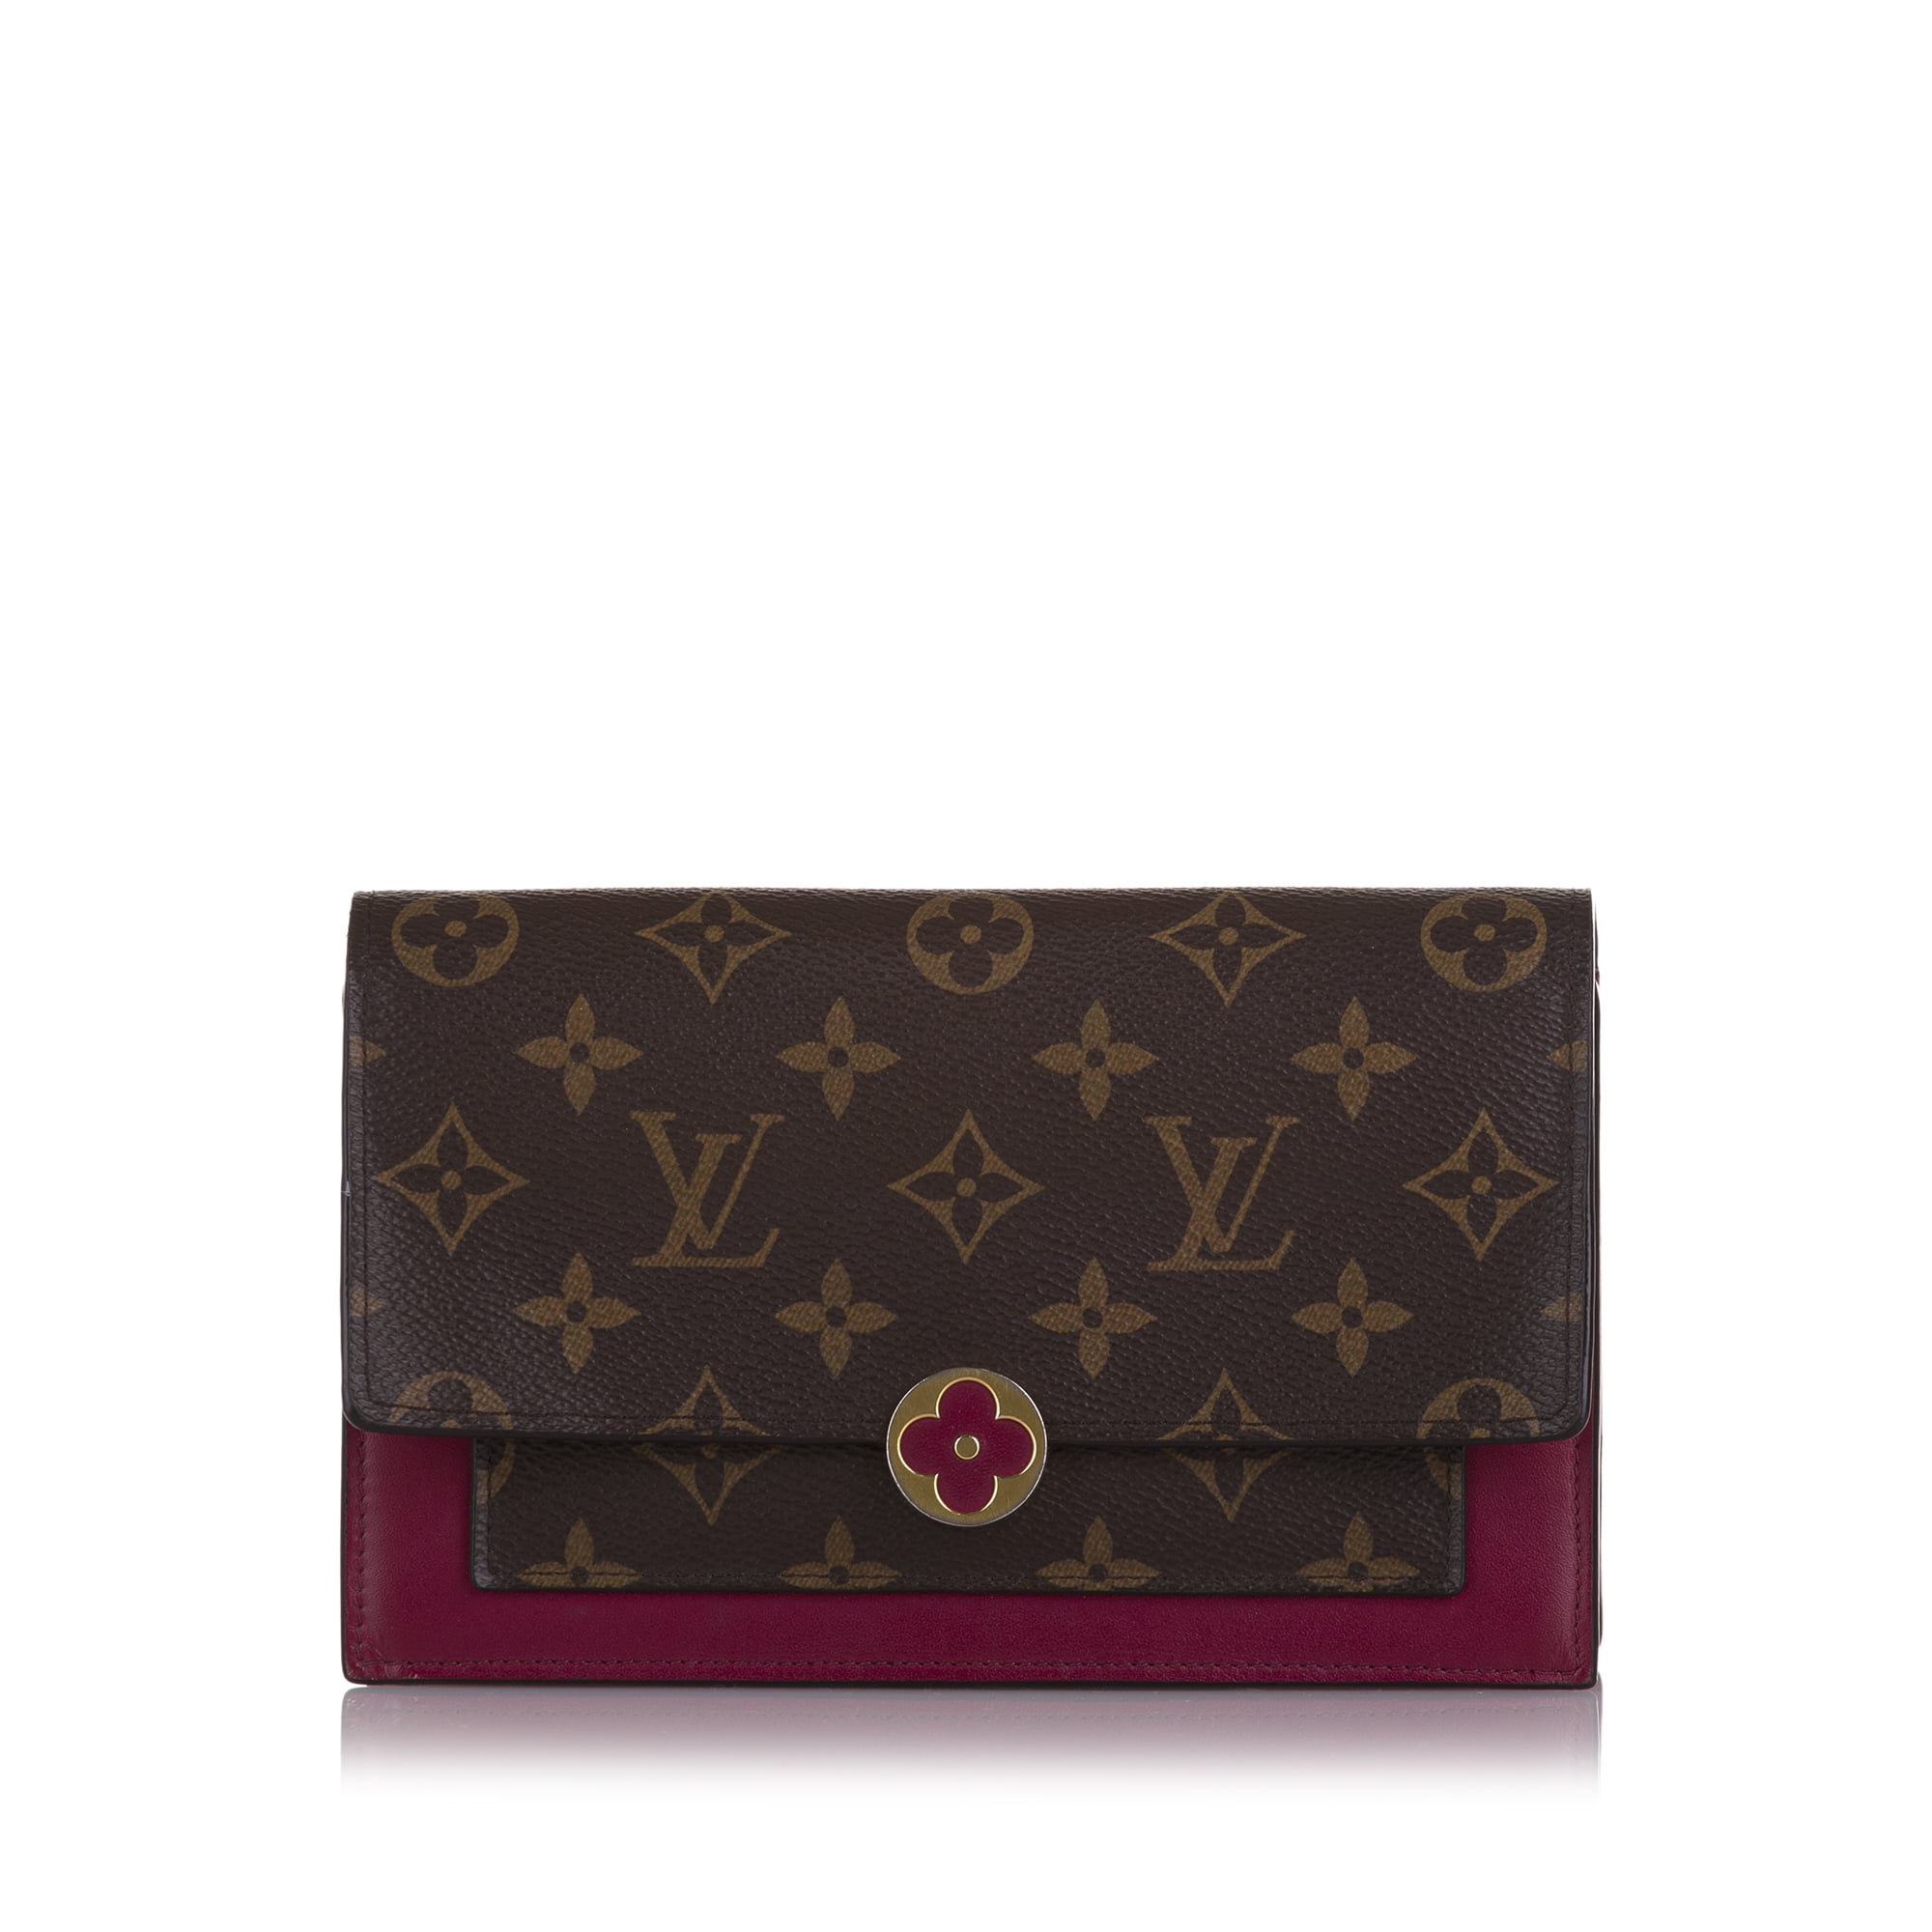 Louis Vuitton - Authenticated Handbag - Leather Burgundy Plain for Women, Good Condition